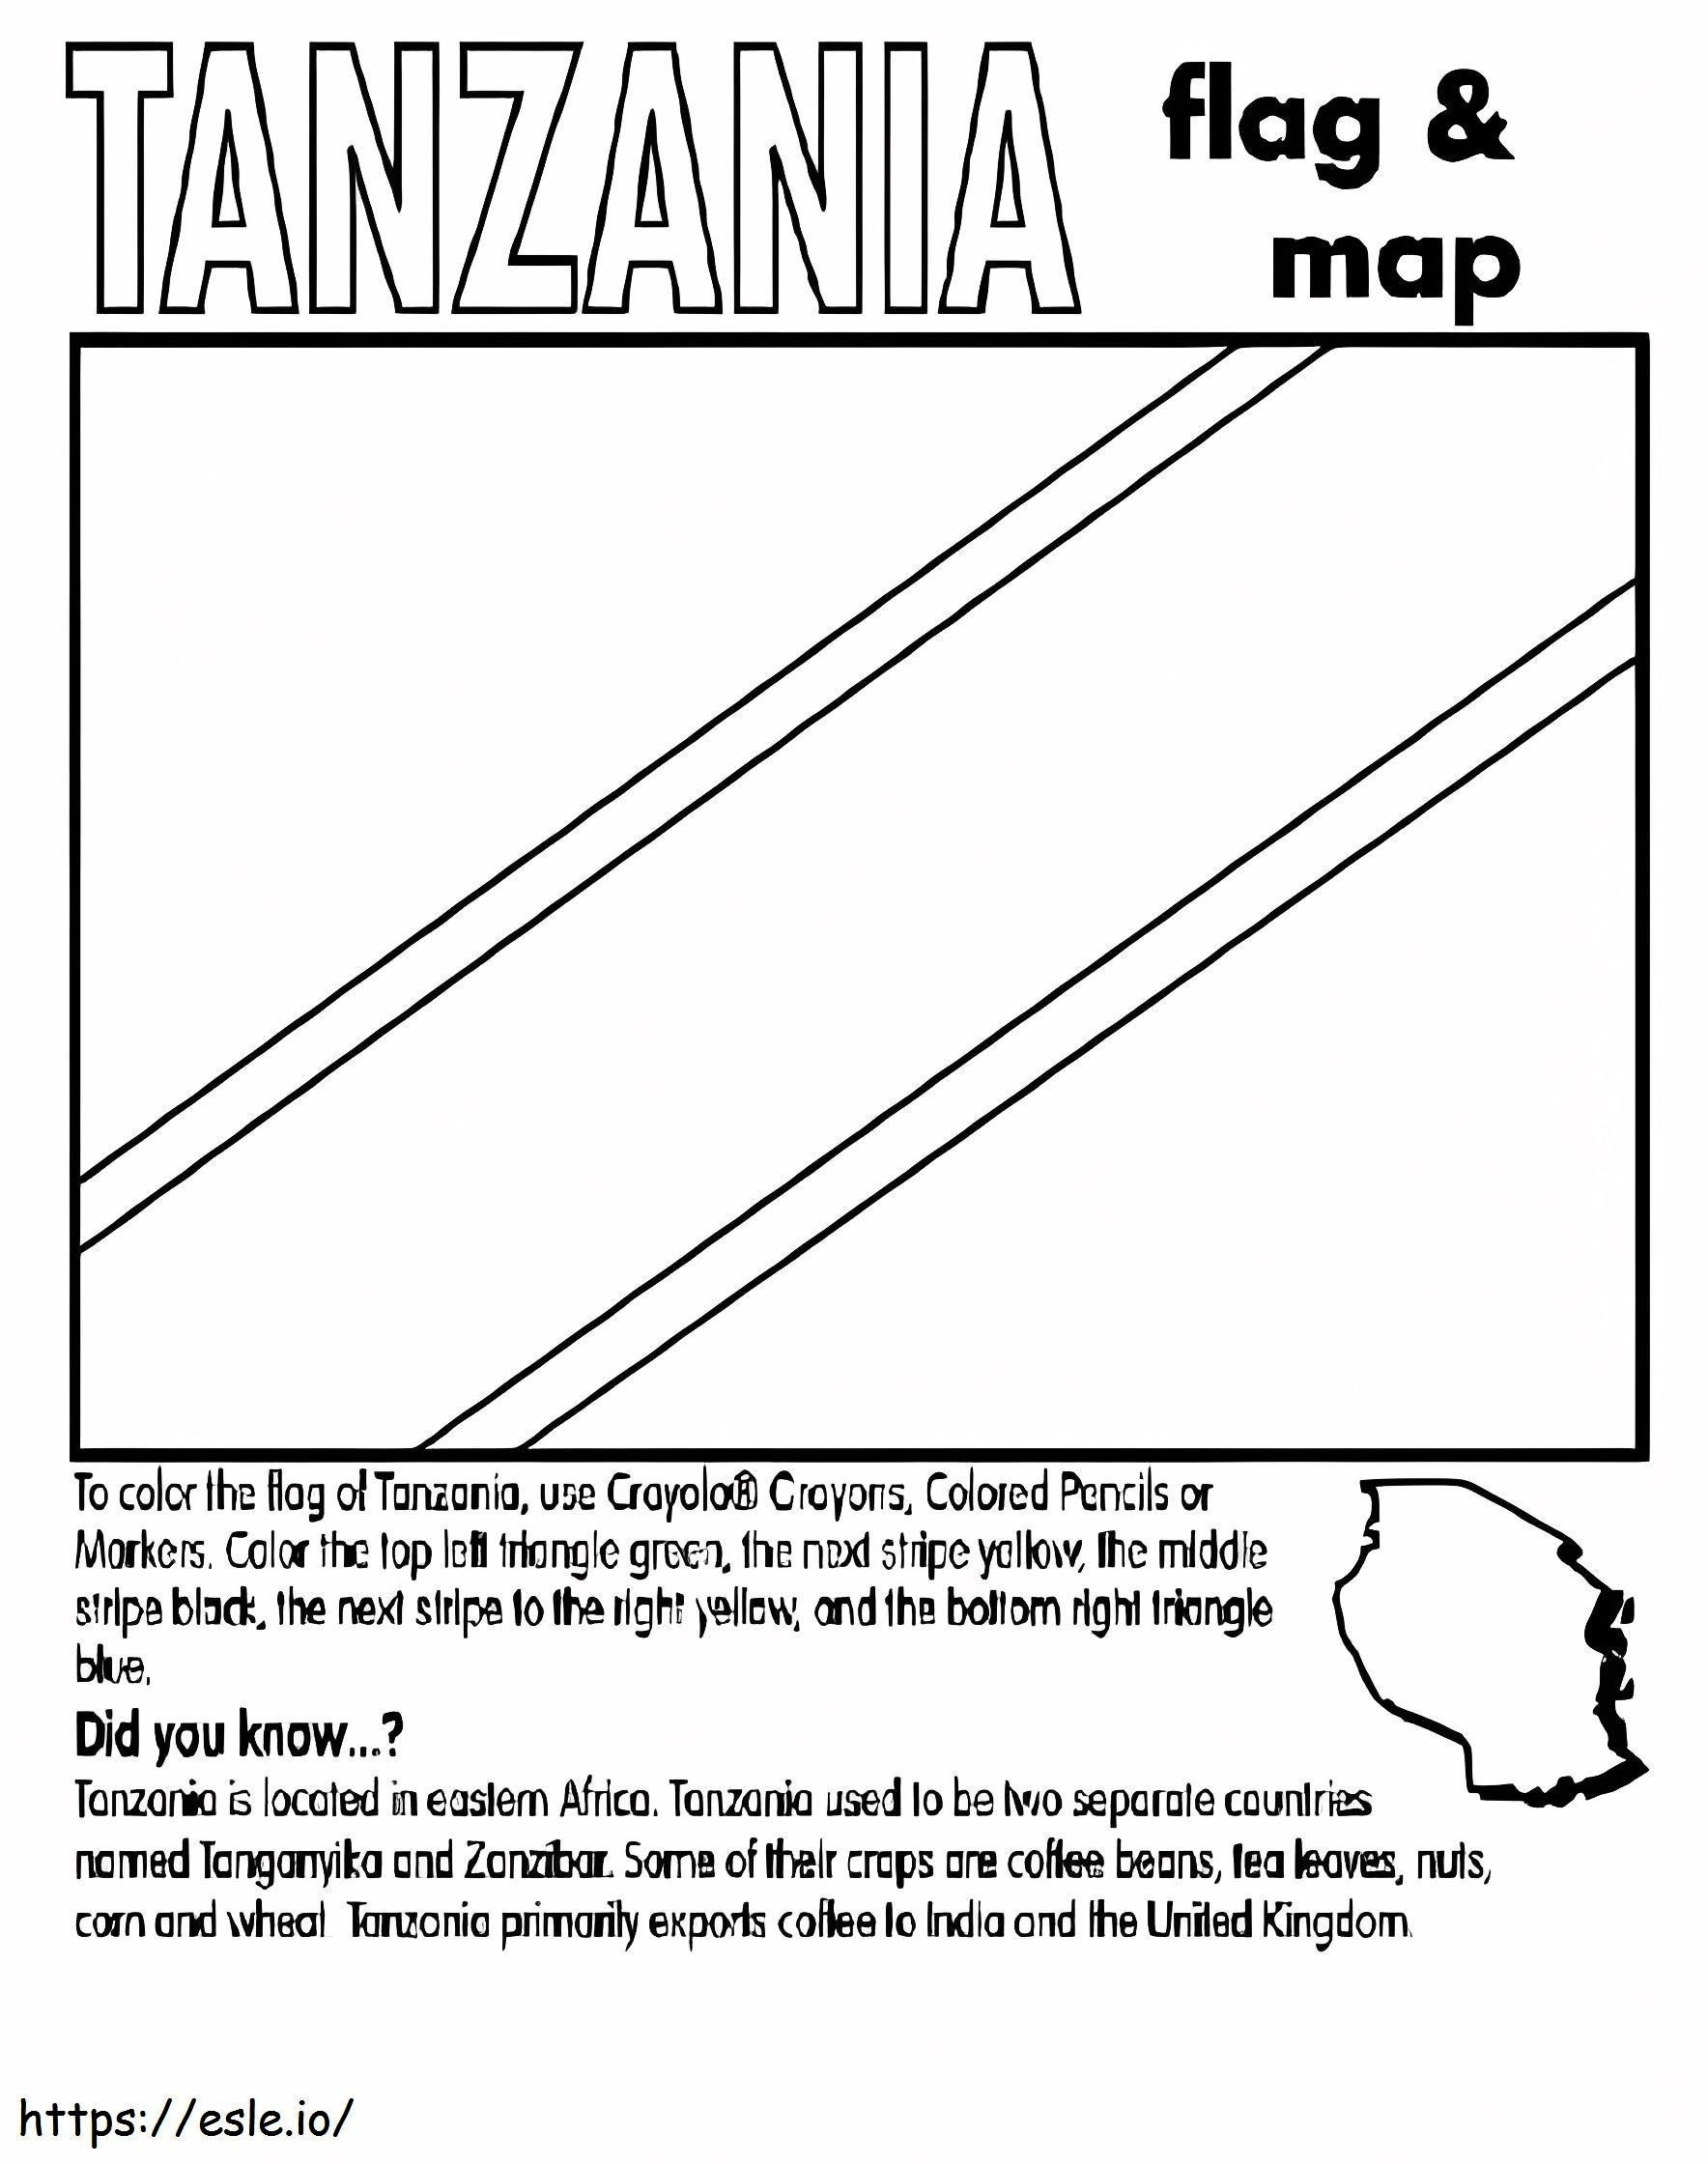 Tanzania Flag And Map coloring page